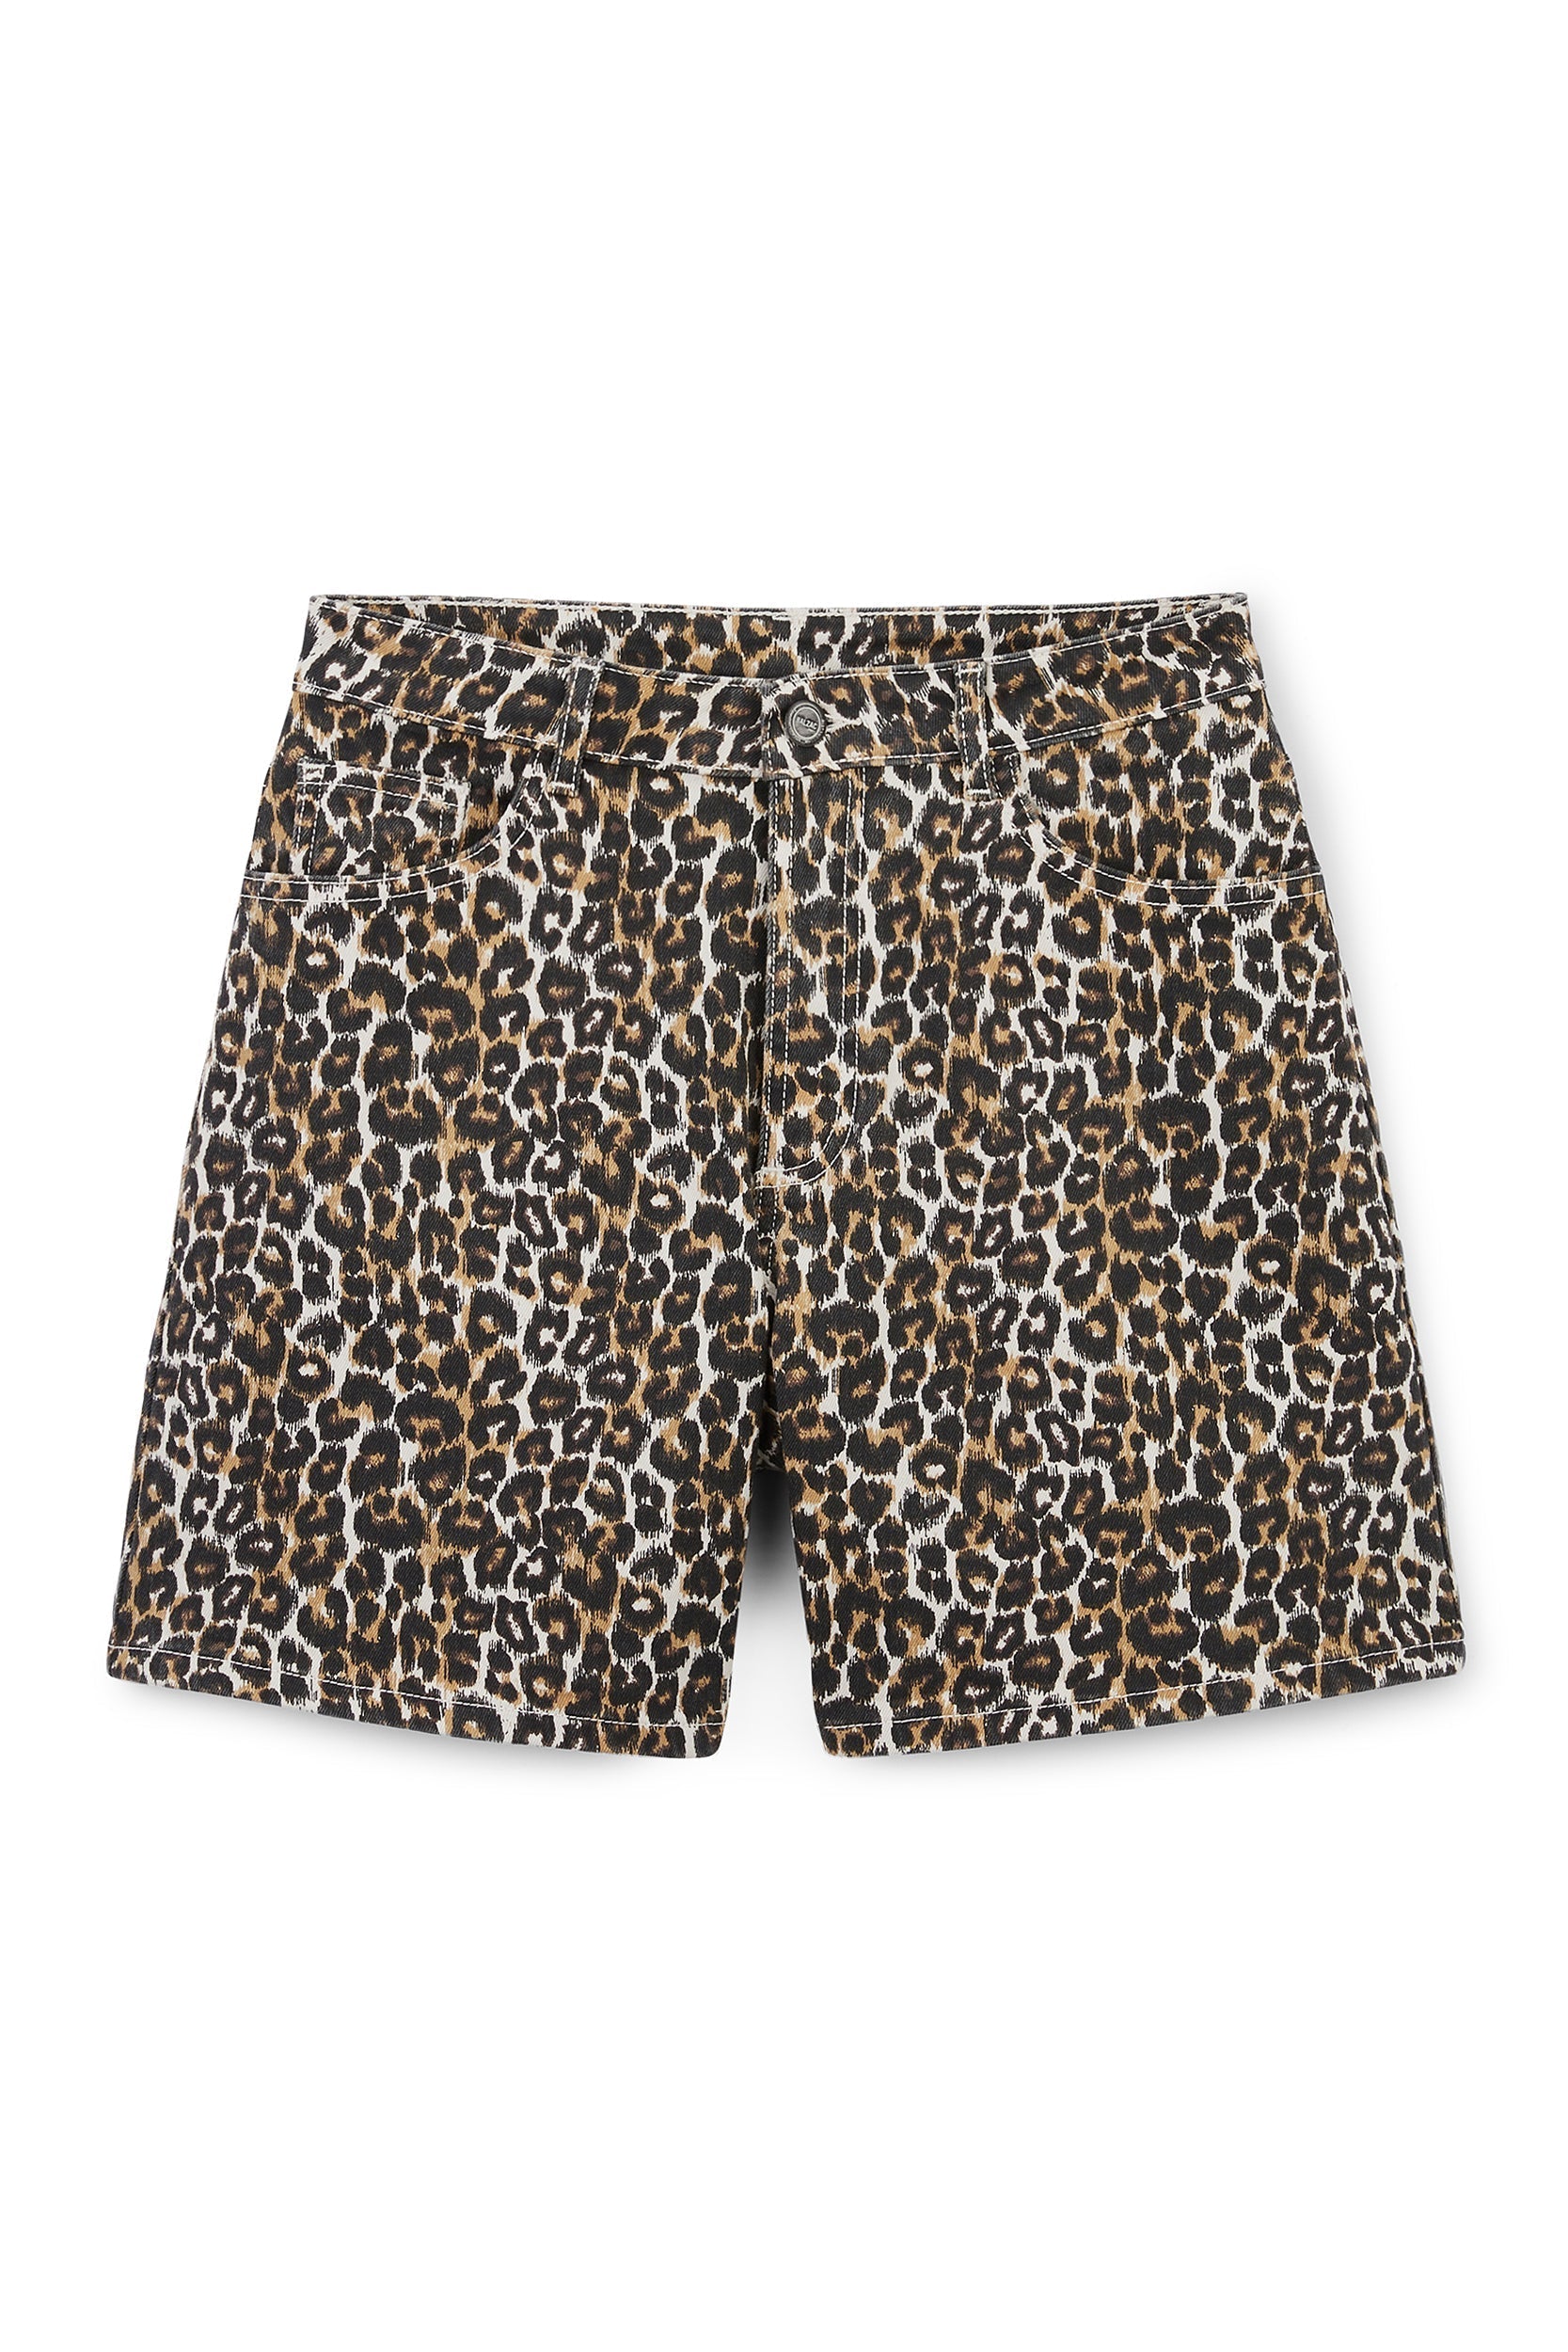 Maylone leopard shorts